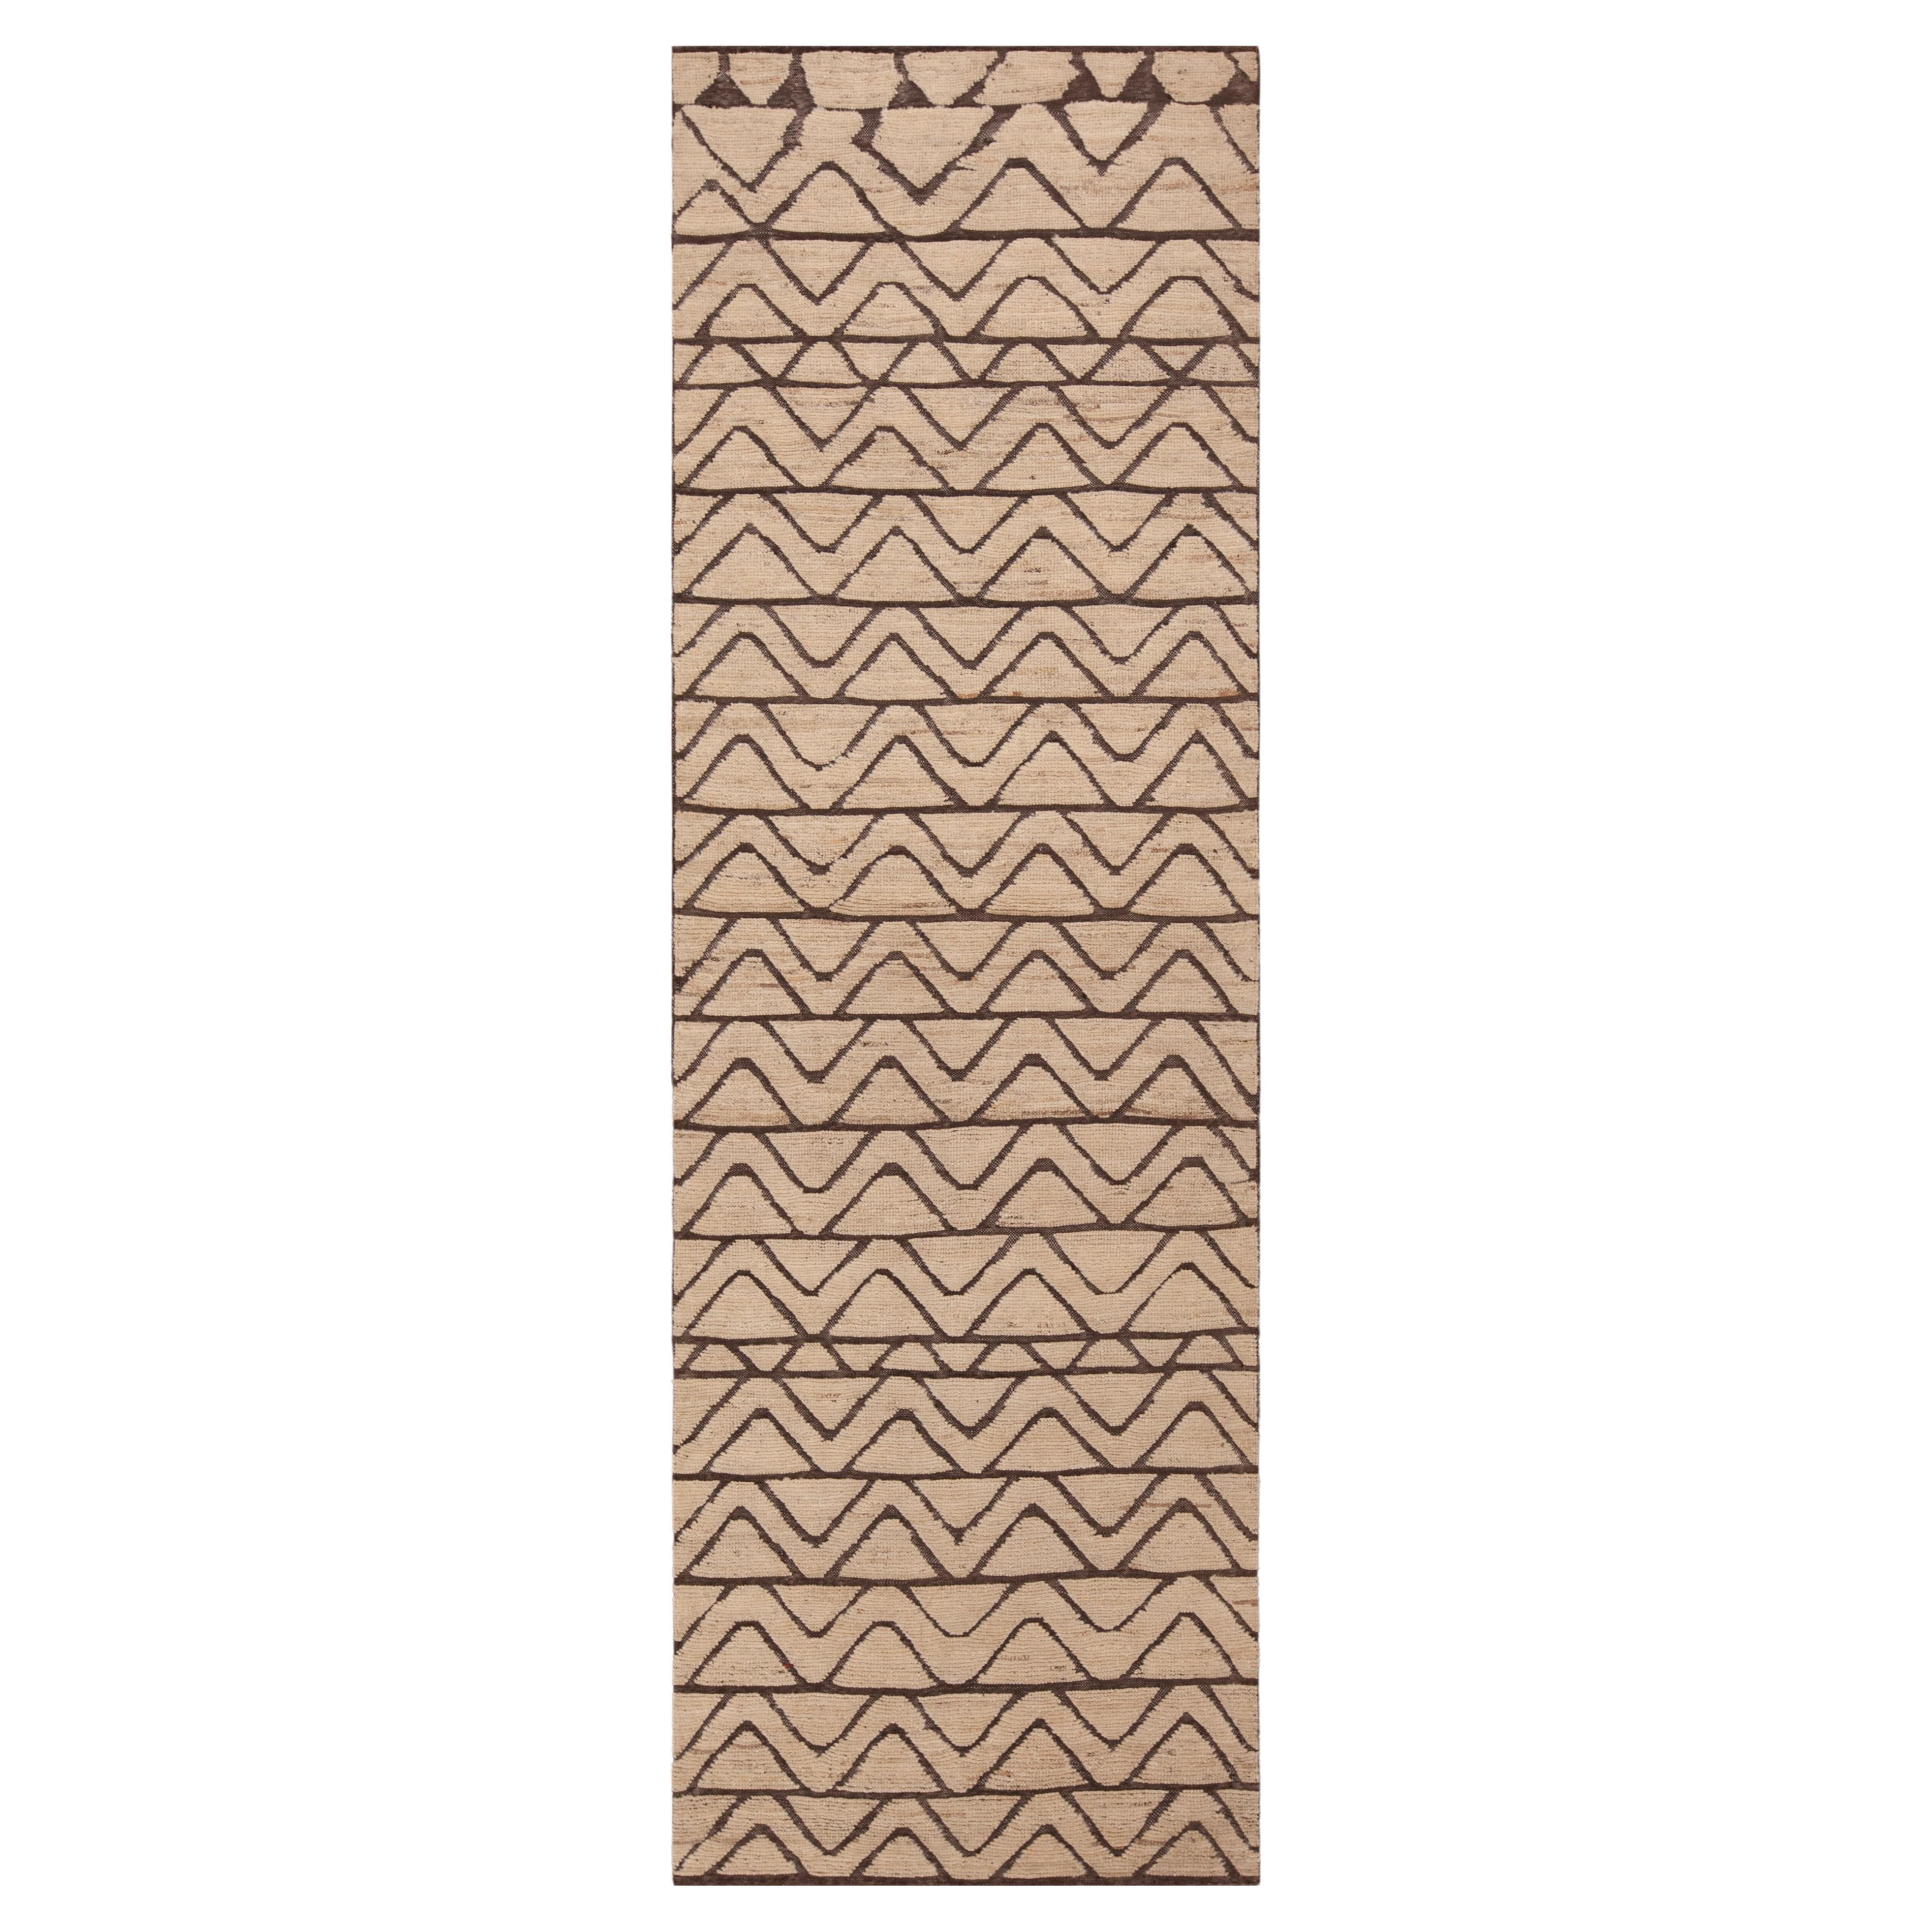 Nazmiyal Collection Neutral Tribal Geometric Modern Hallway Runner Rug 3' x 9'8" For Sale